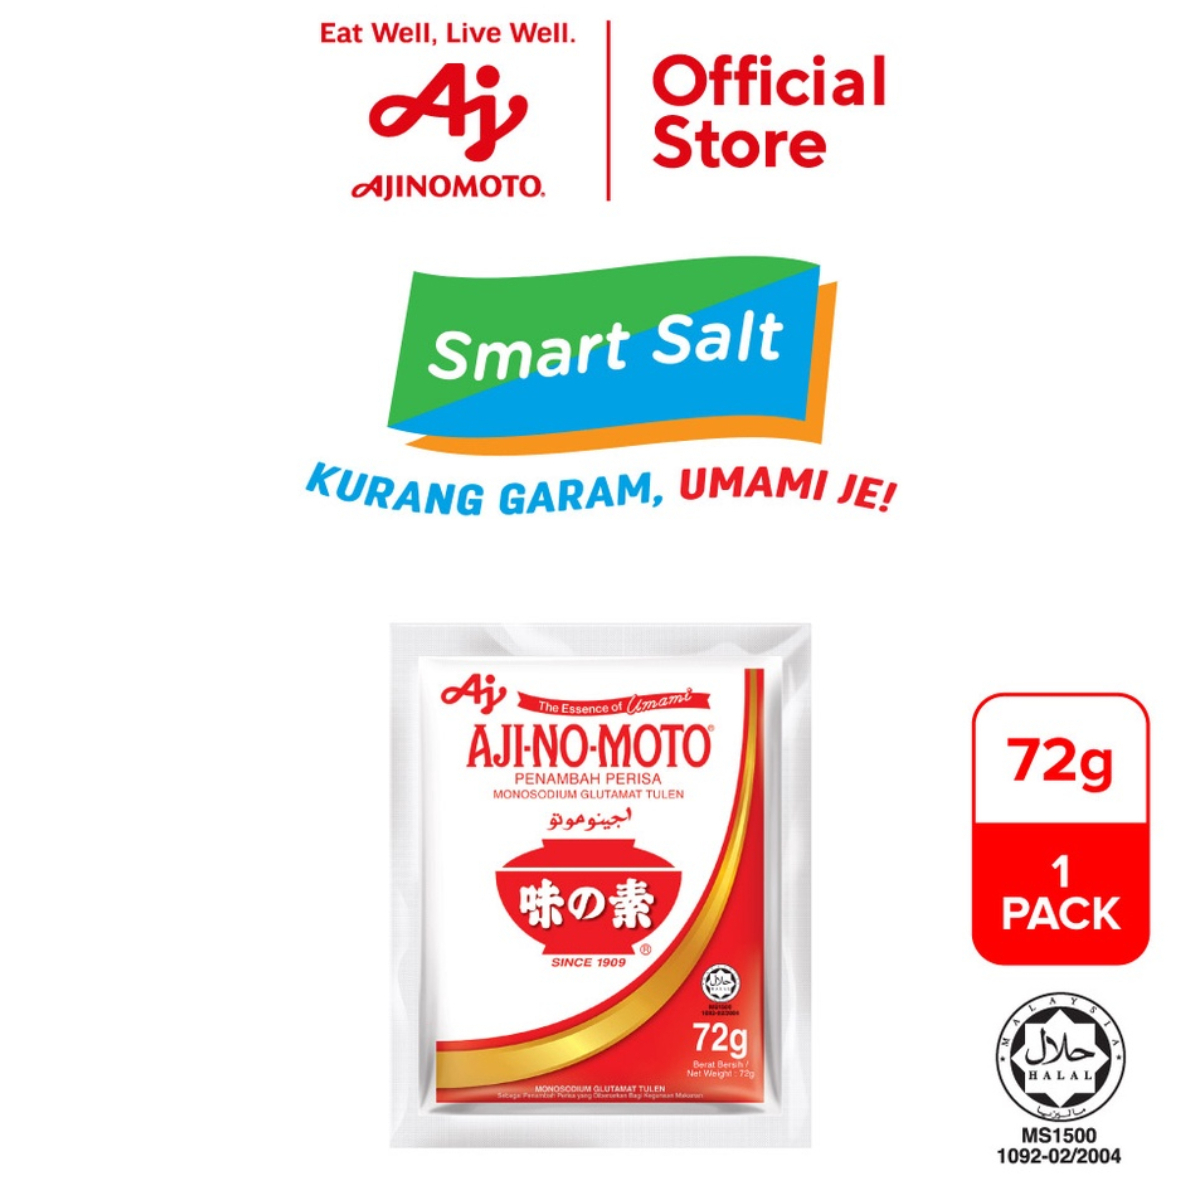 Aji-No-Moto Flavour Enhancer 72 g